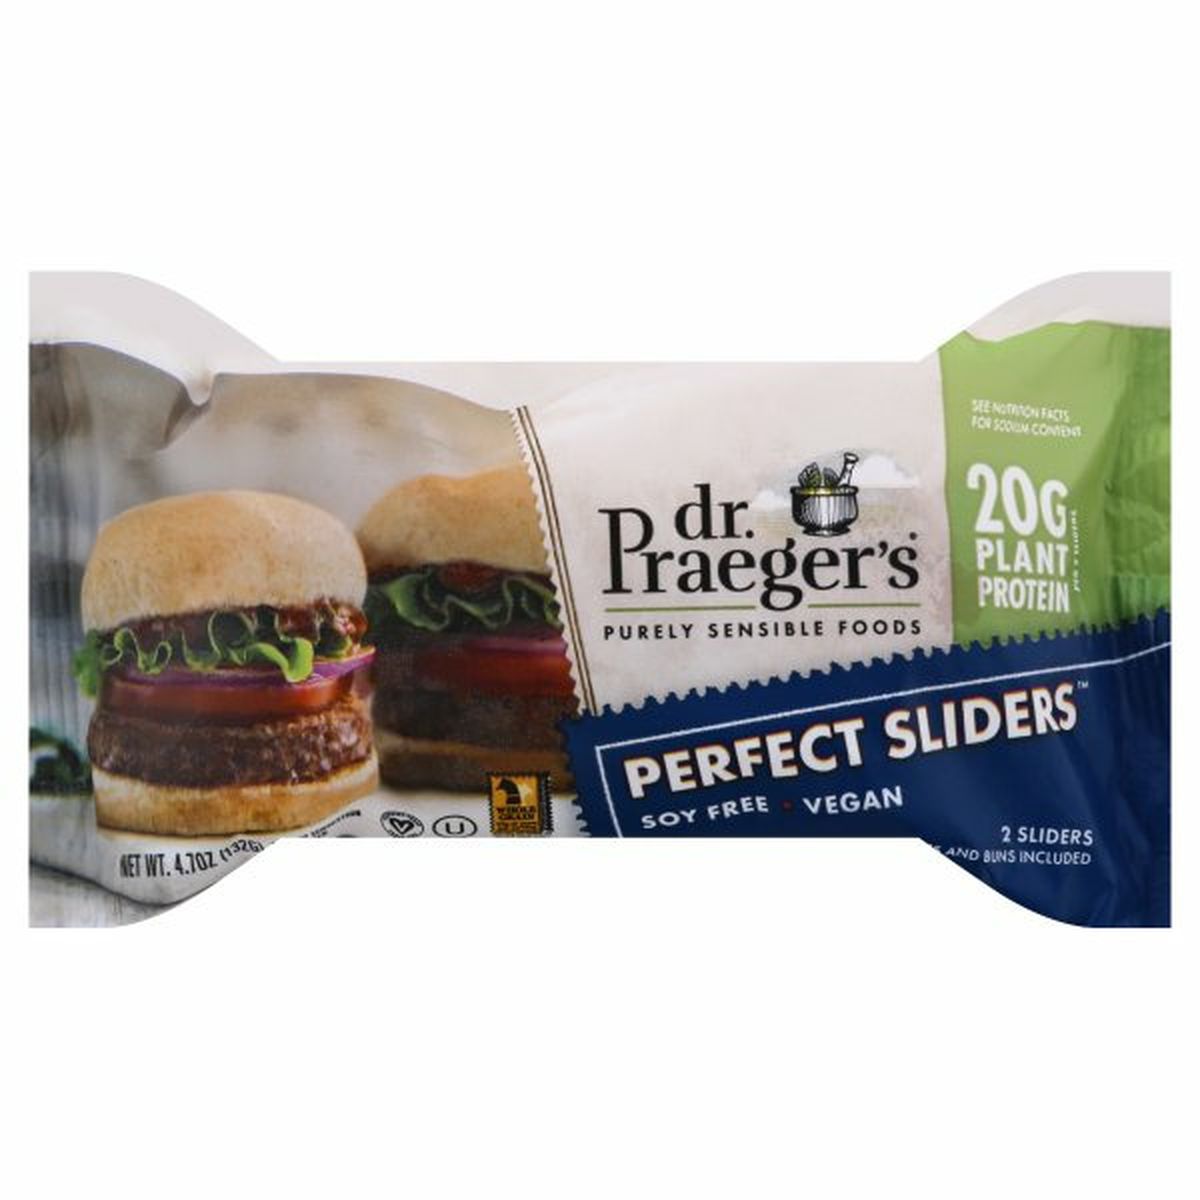 Calories in Dr. Praeger's Perfect Sliders